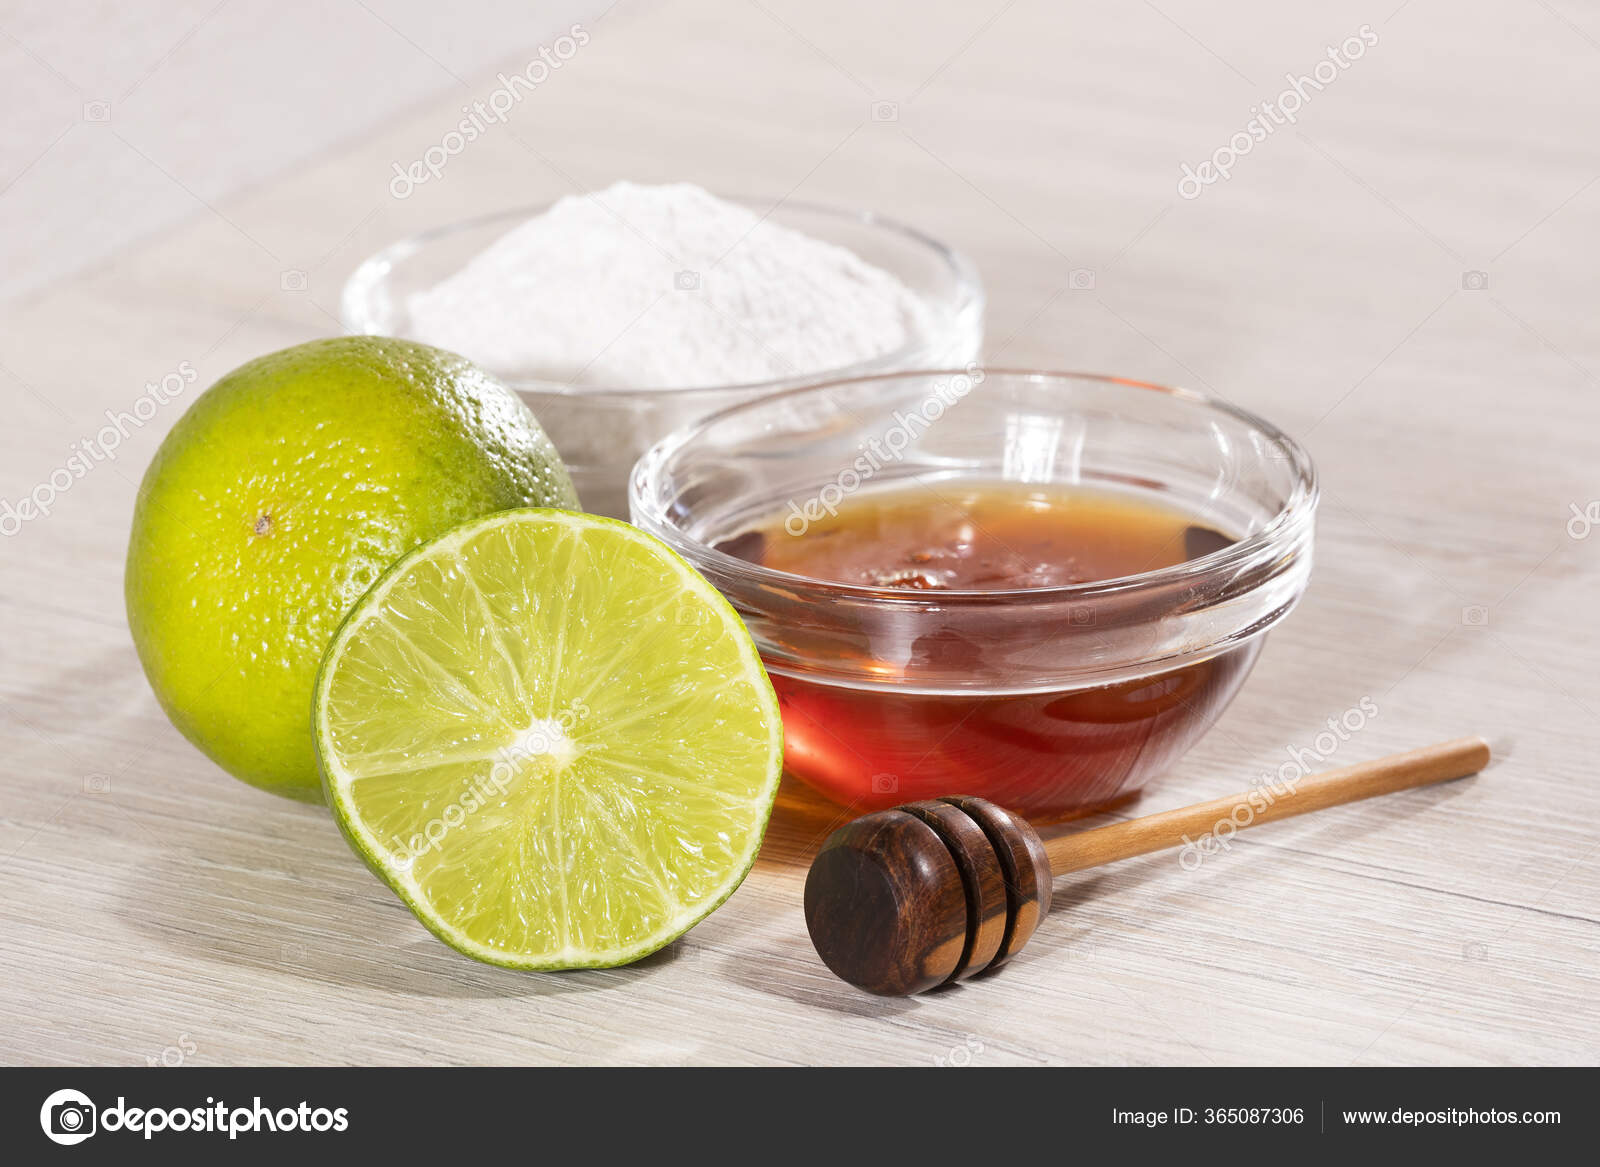 Homemade Mask Lemon Soda Stock Photo ©Luisecheverriurrea 365087306